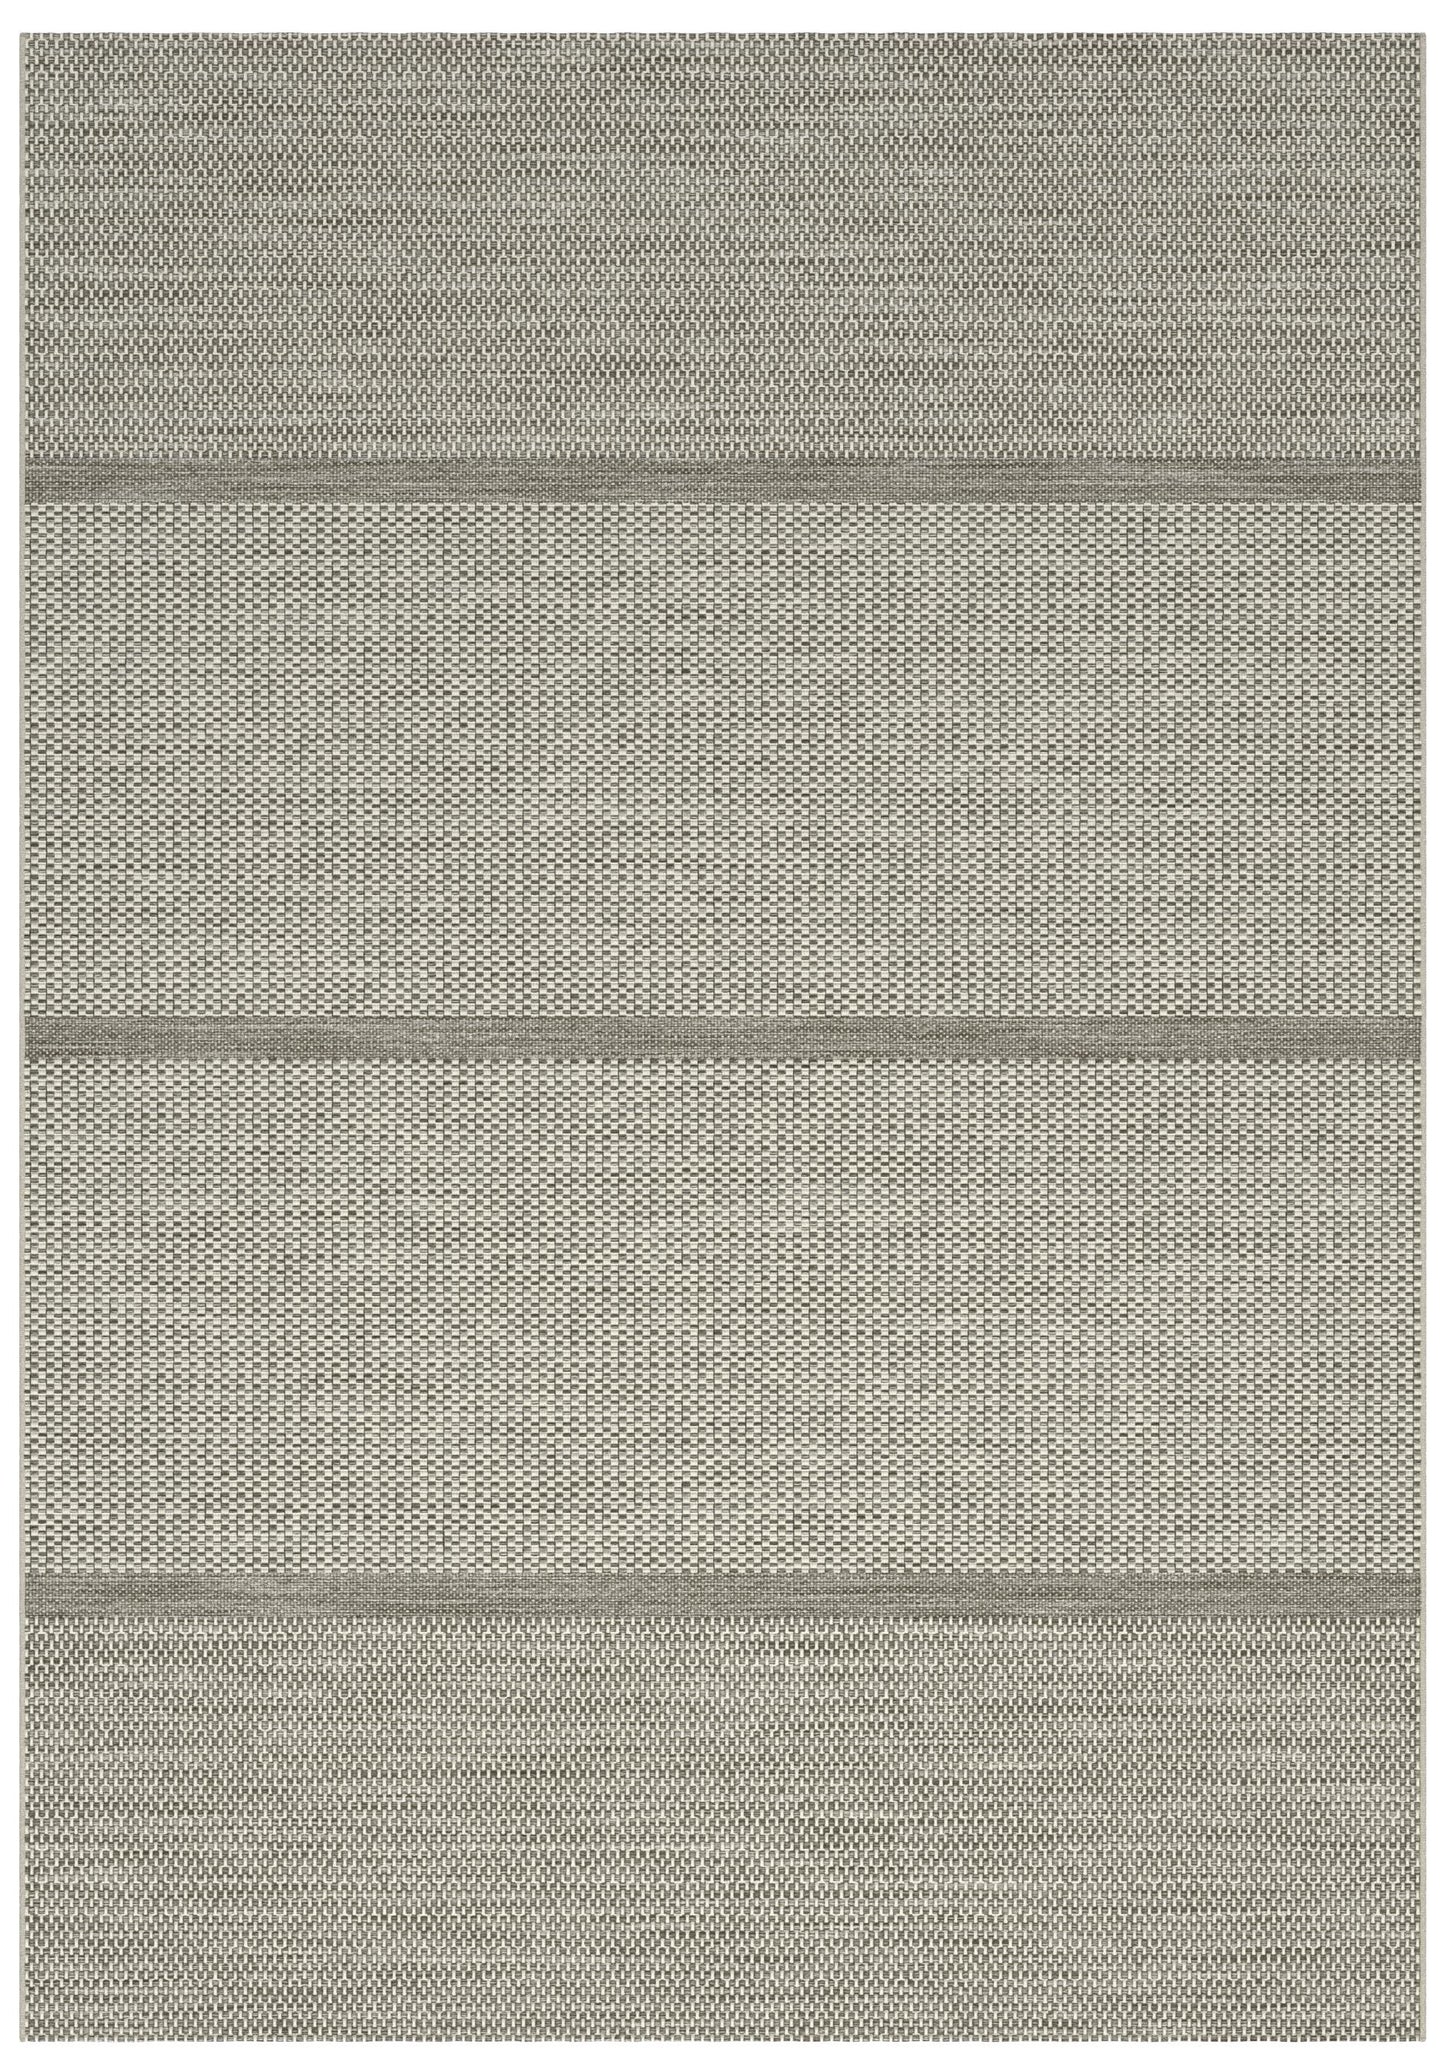 Striped Sands White, Linen Indoor / Outdoor Polypropylene Area Rug 8x10